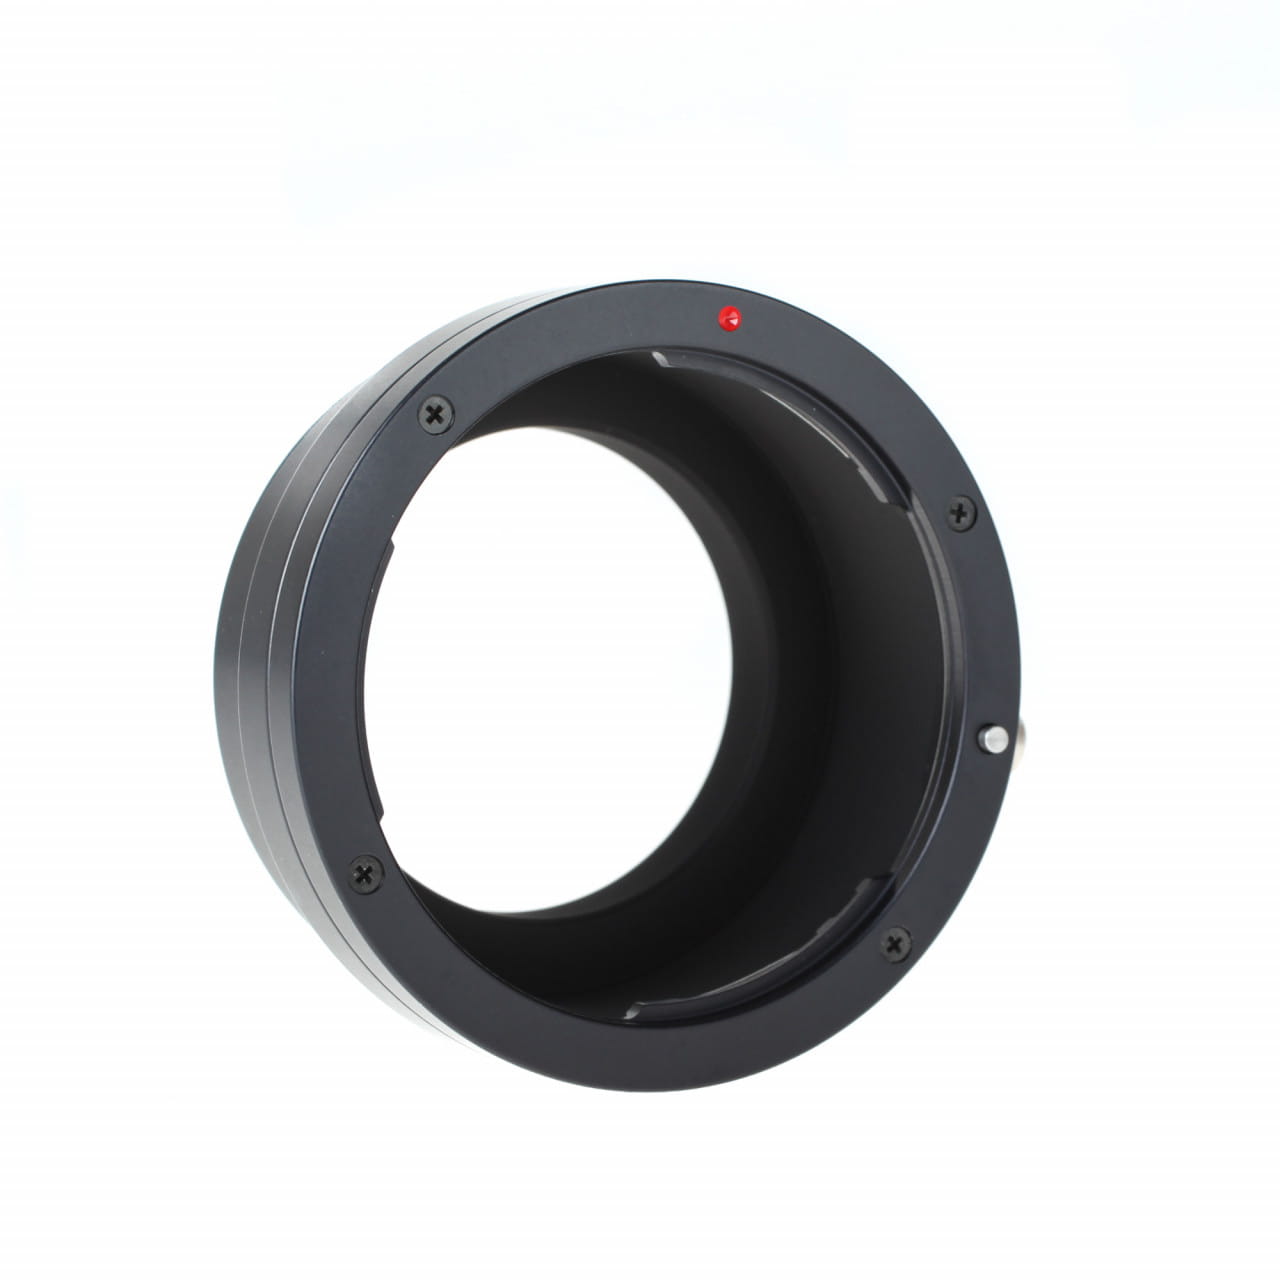 Novoflex Adapter für Canon-EOS-Objektiv an Sony-E-Mount-Kamera – z.B. für Sony a7-Serie NEX/EOS